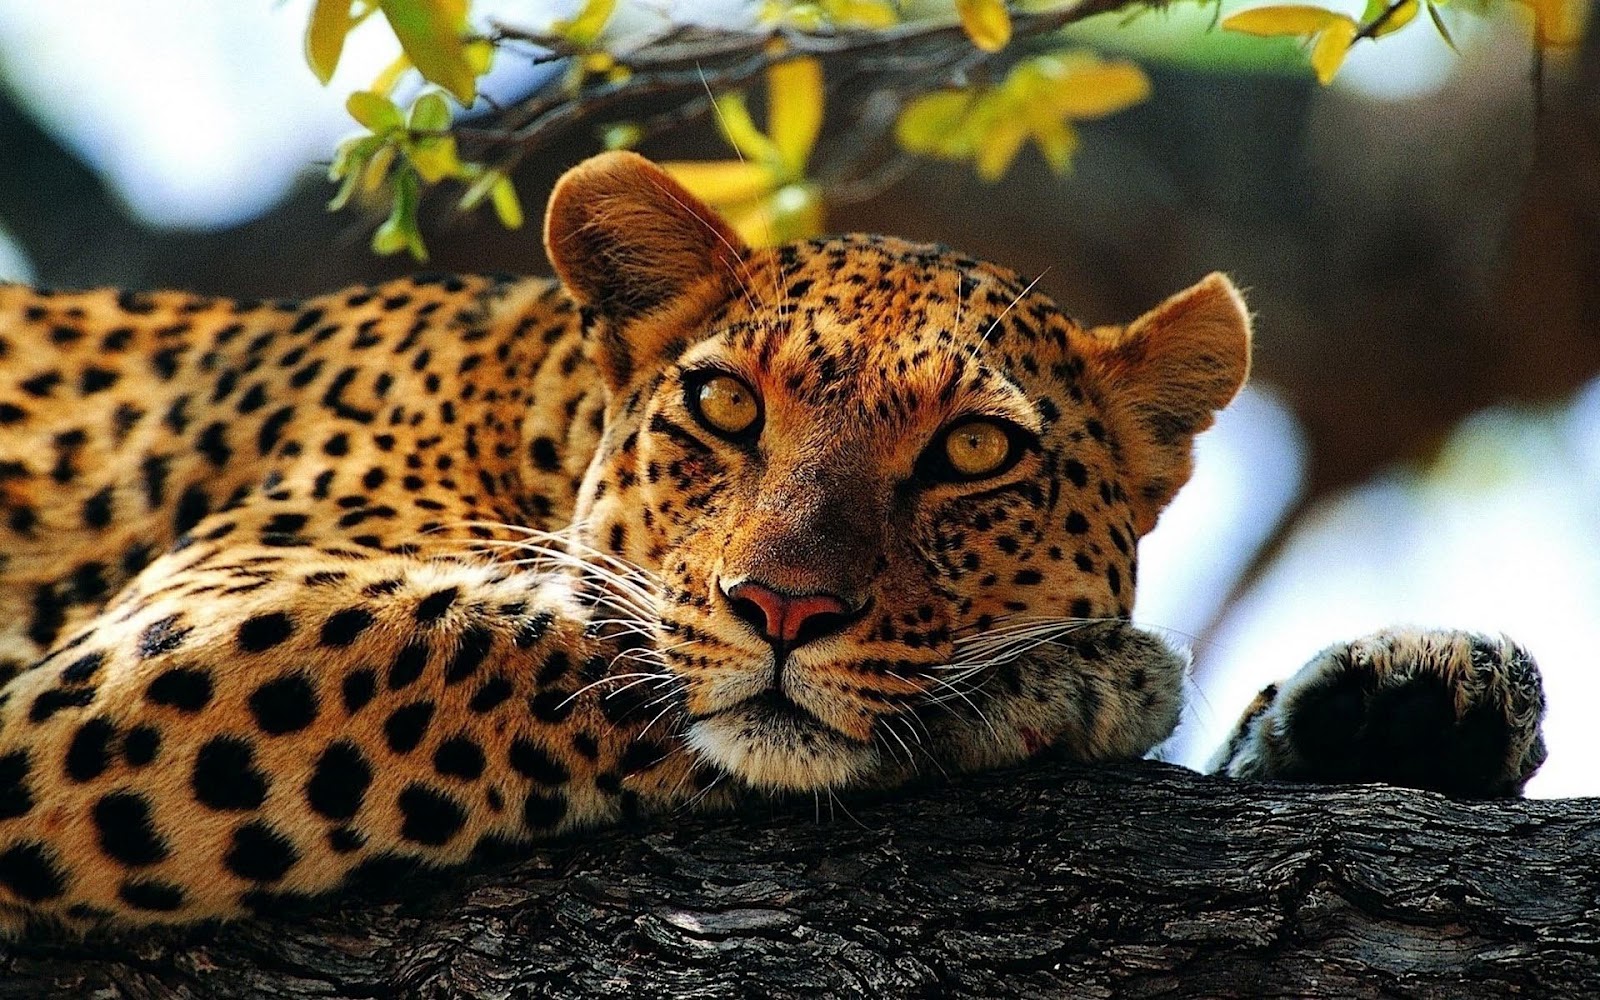 HD animal wallpaper with a resting cheetah in a tree HD cheetah